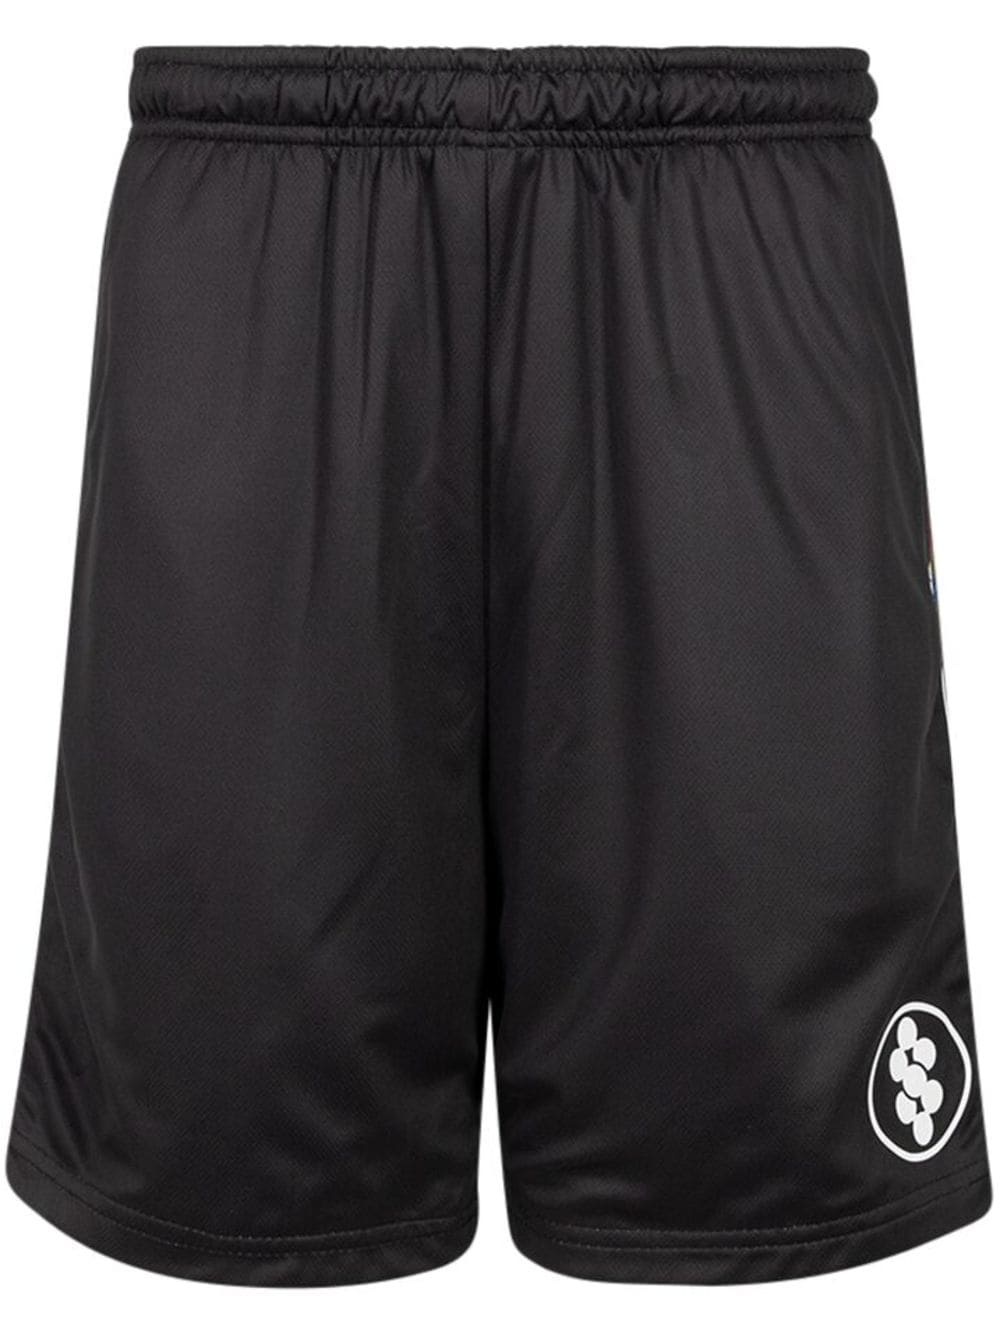 Feedback Soccer printed shorts - 1